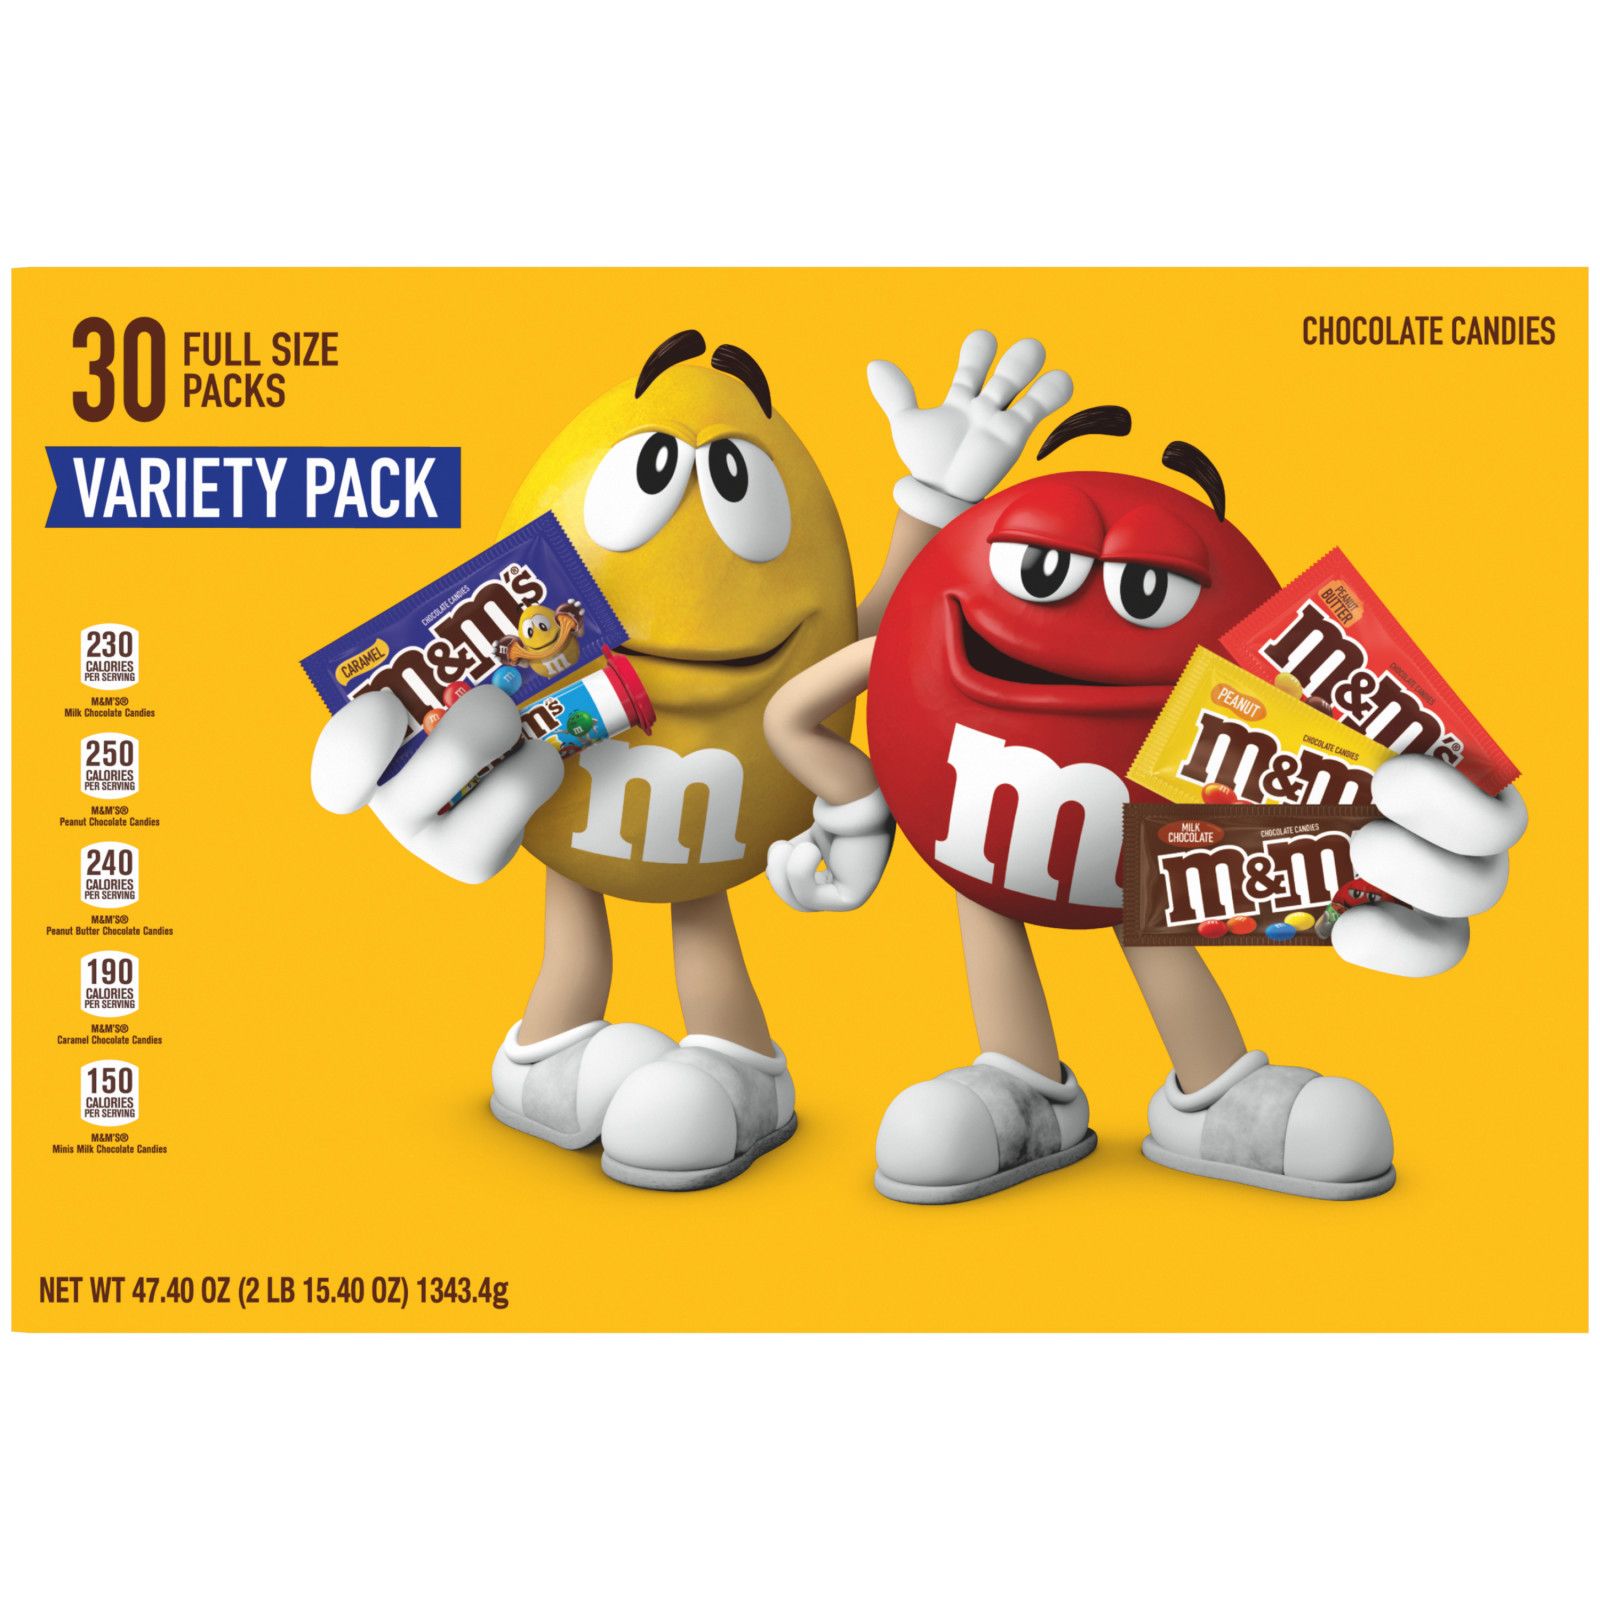 M&M's Peanut Chocolate Candies - 48ct Display Box